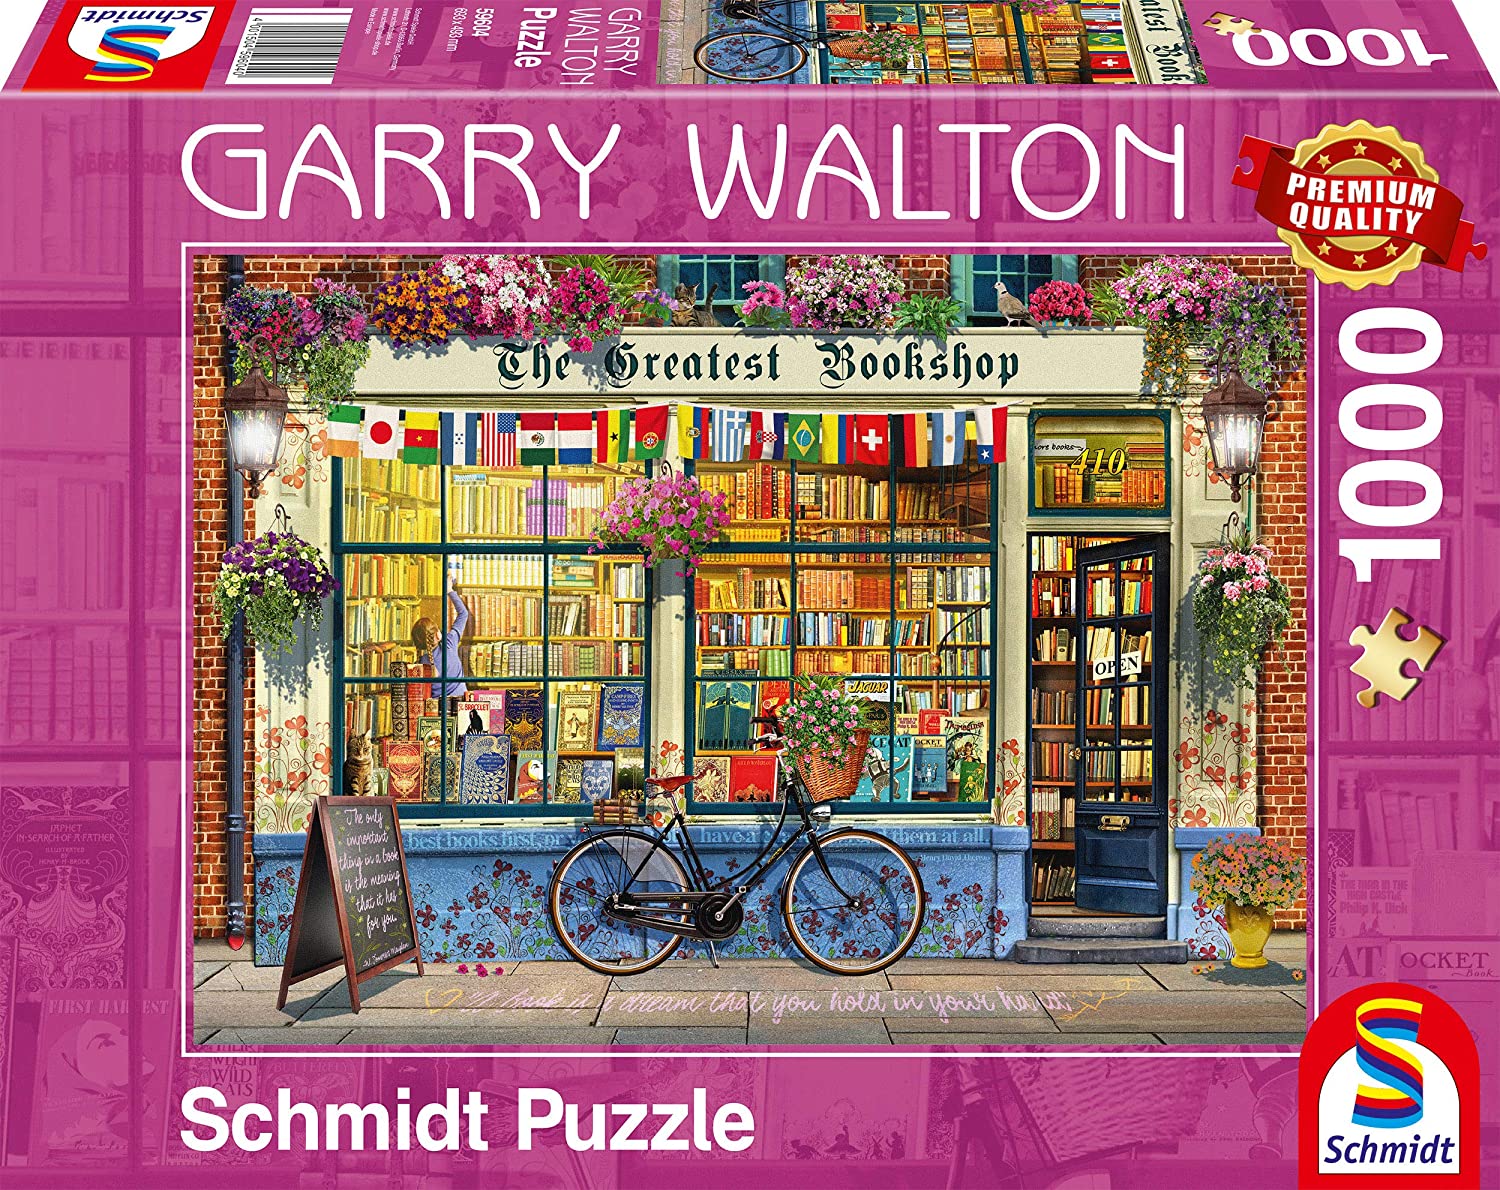 BUCHHANDLUNG BOOK STORE Schmidt Puzzle 59604-1000 Pcs. GARRY WALTON 